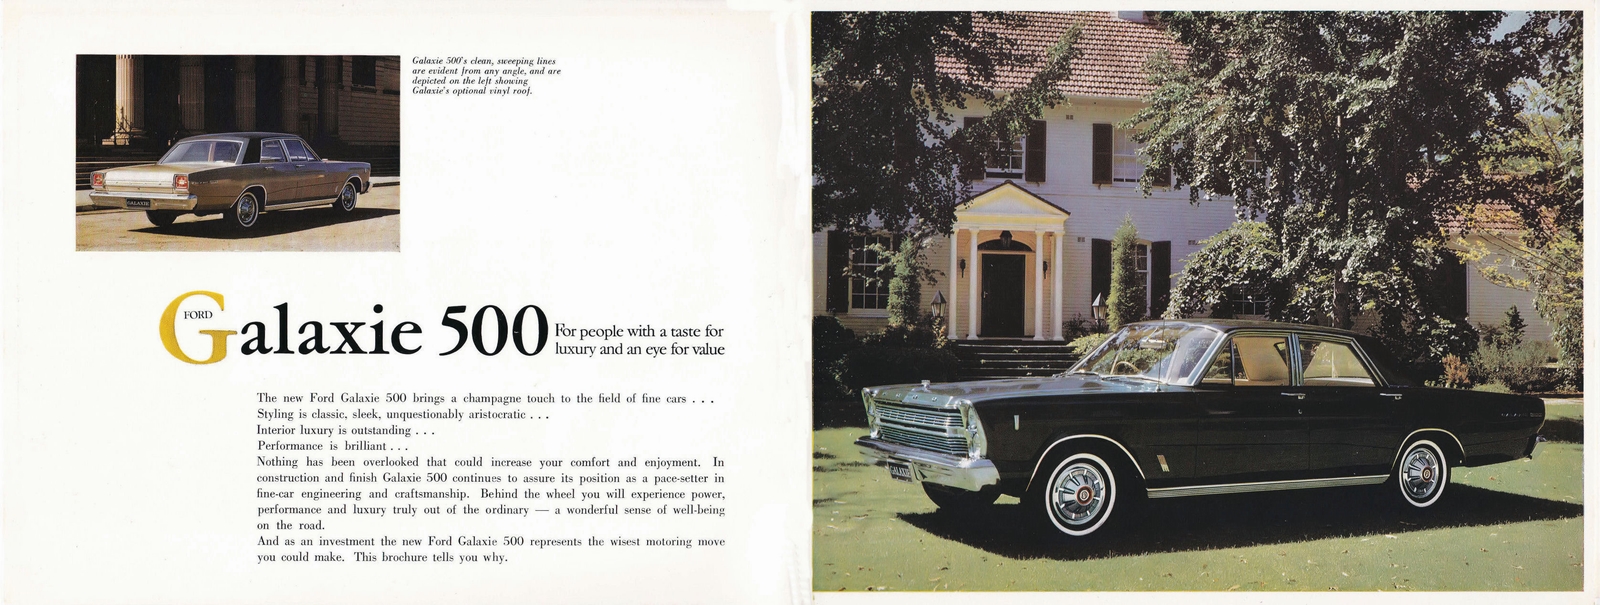 n_1966 Ford Galaxie 500-02-03.jpg